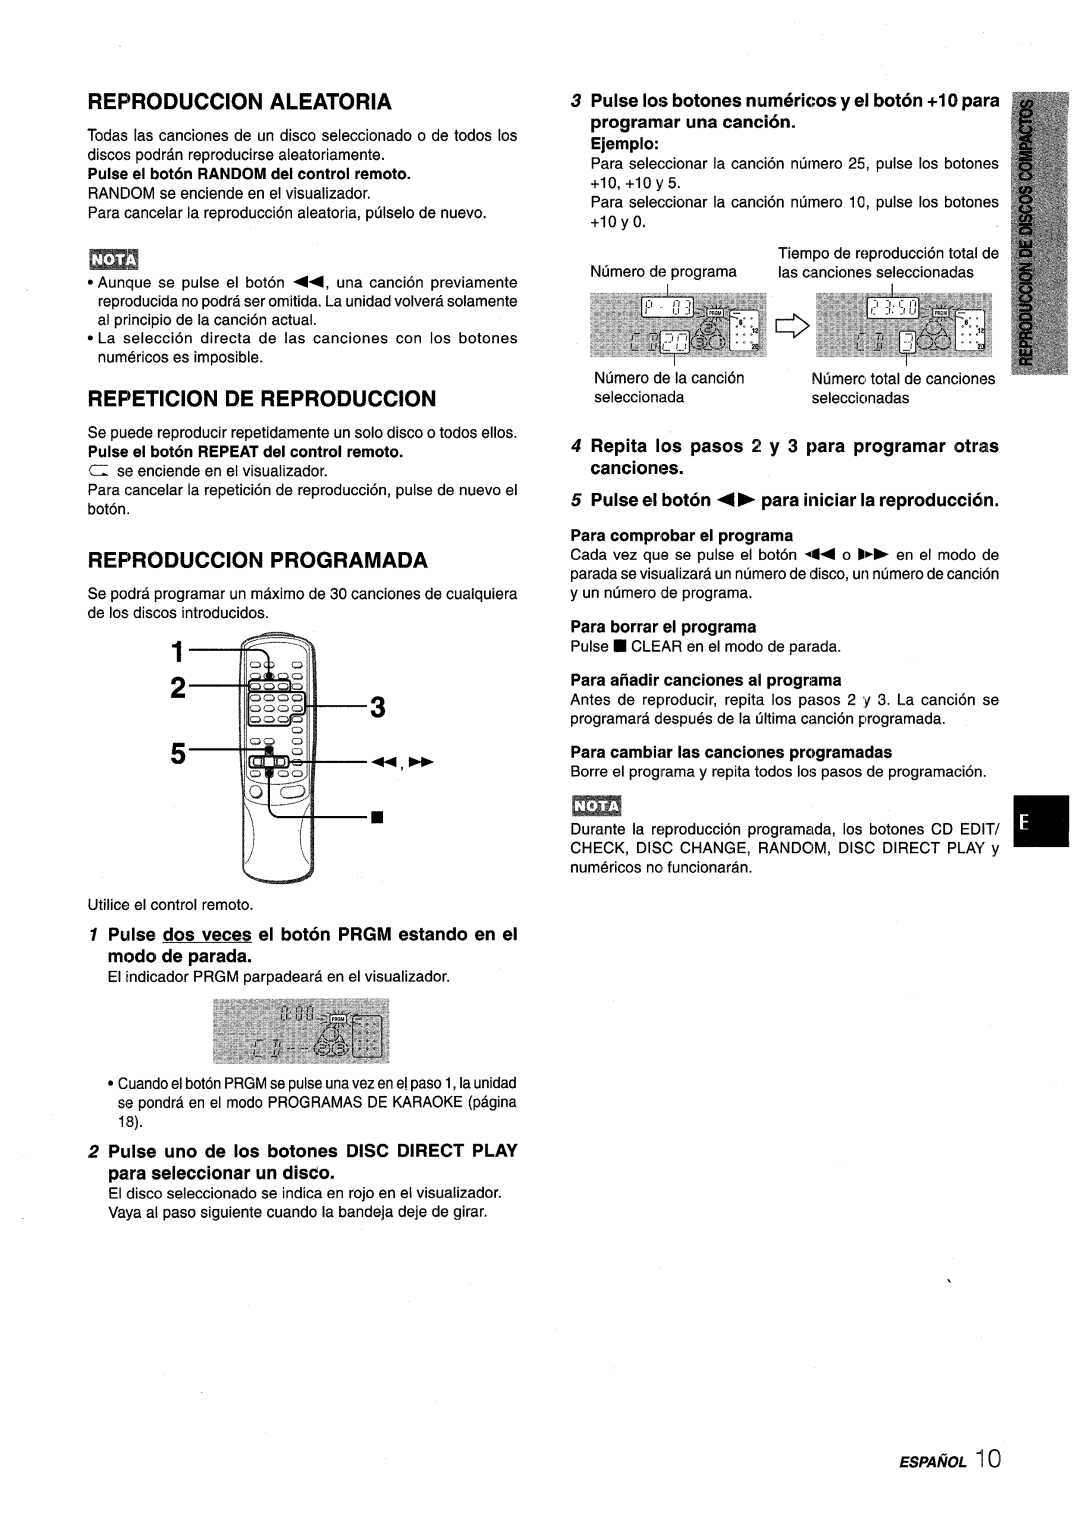 Aiwa NSX-V9000 manual Reprcduccion Aleatoria, Repetition De Reproduction, Reproduction Programada, Ejemplo 